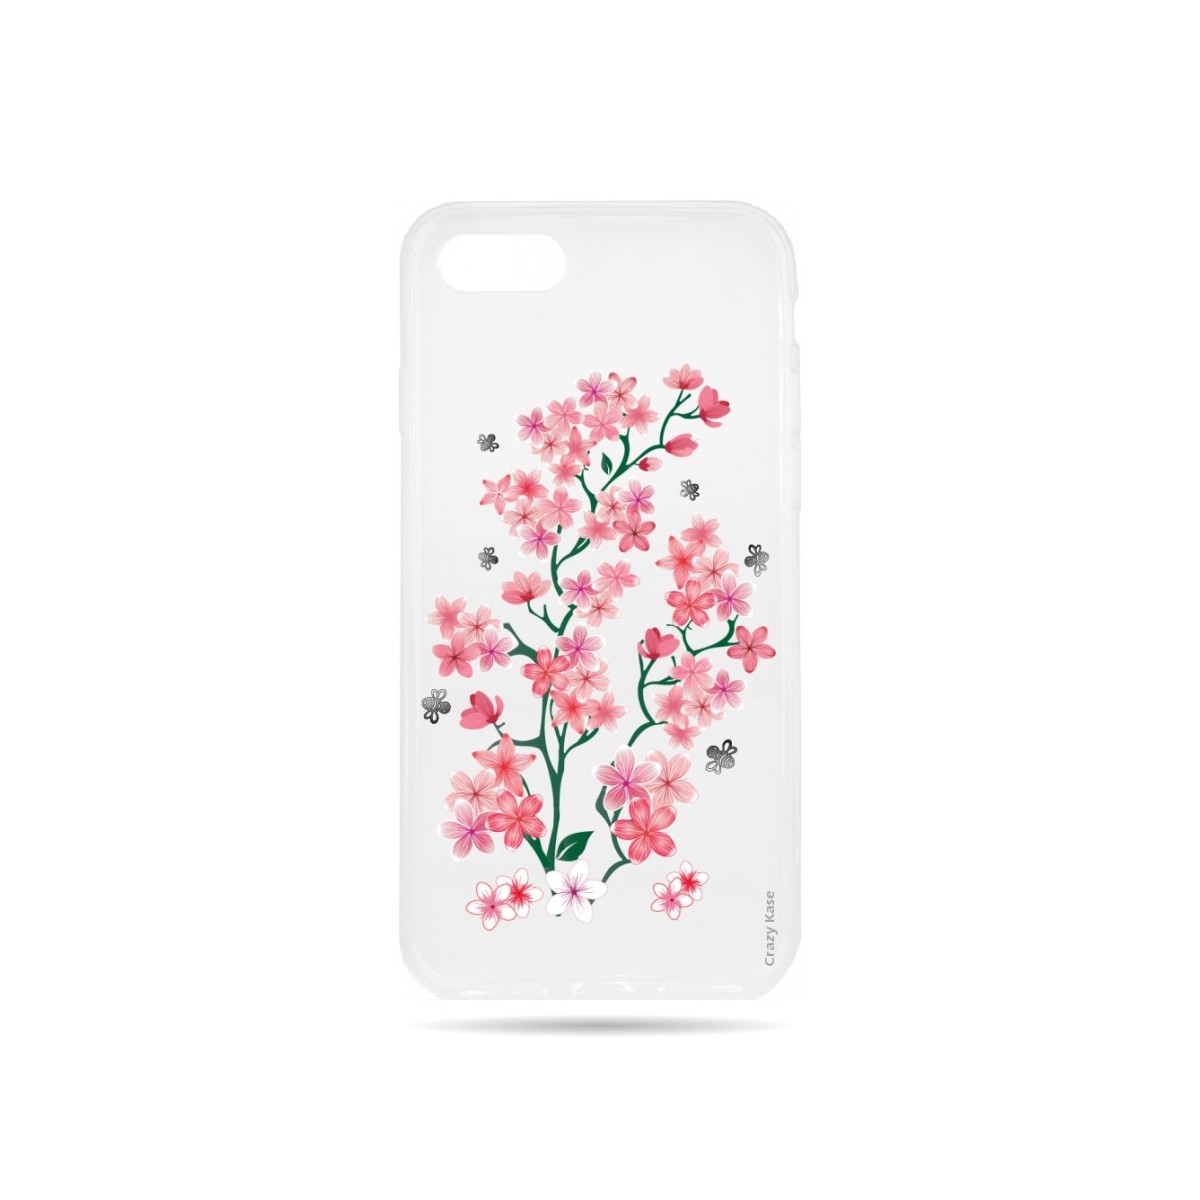 Coque iPhone 8 Transparente souple motif Fleurs de Sakura - Crazy Kase